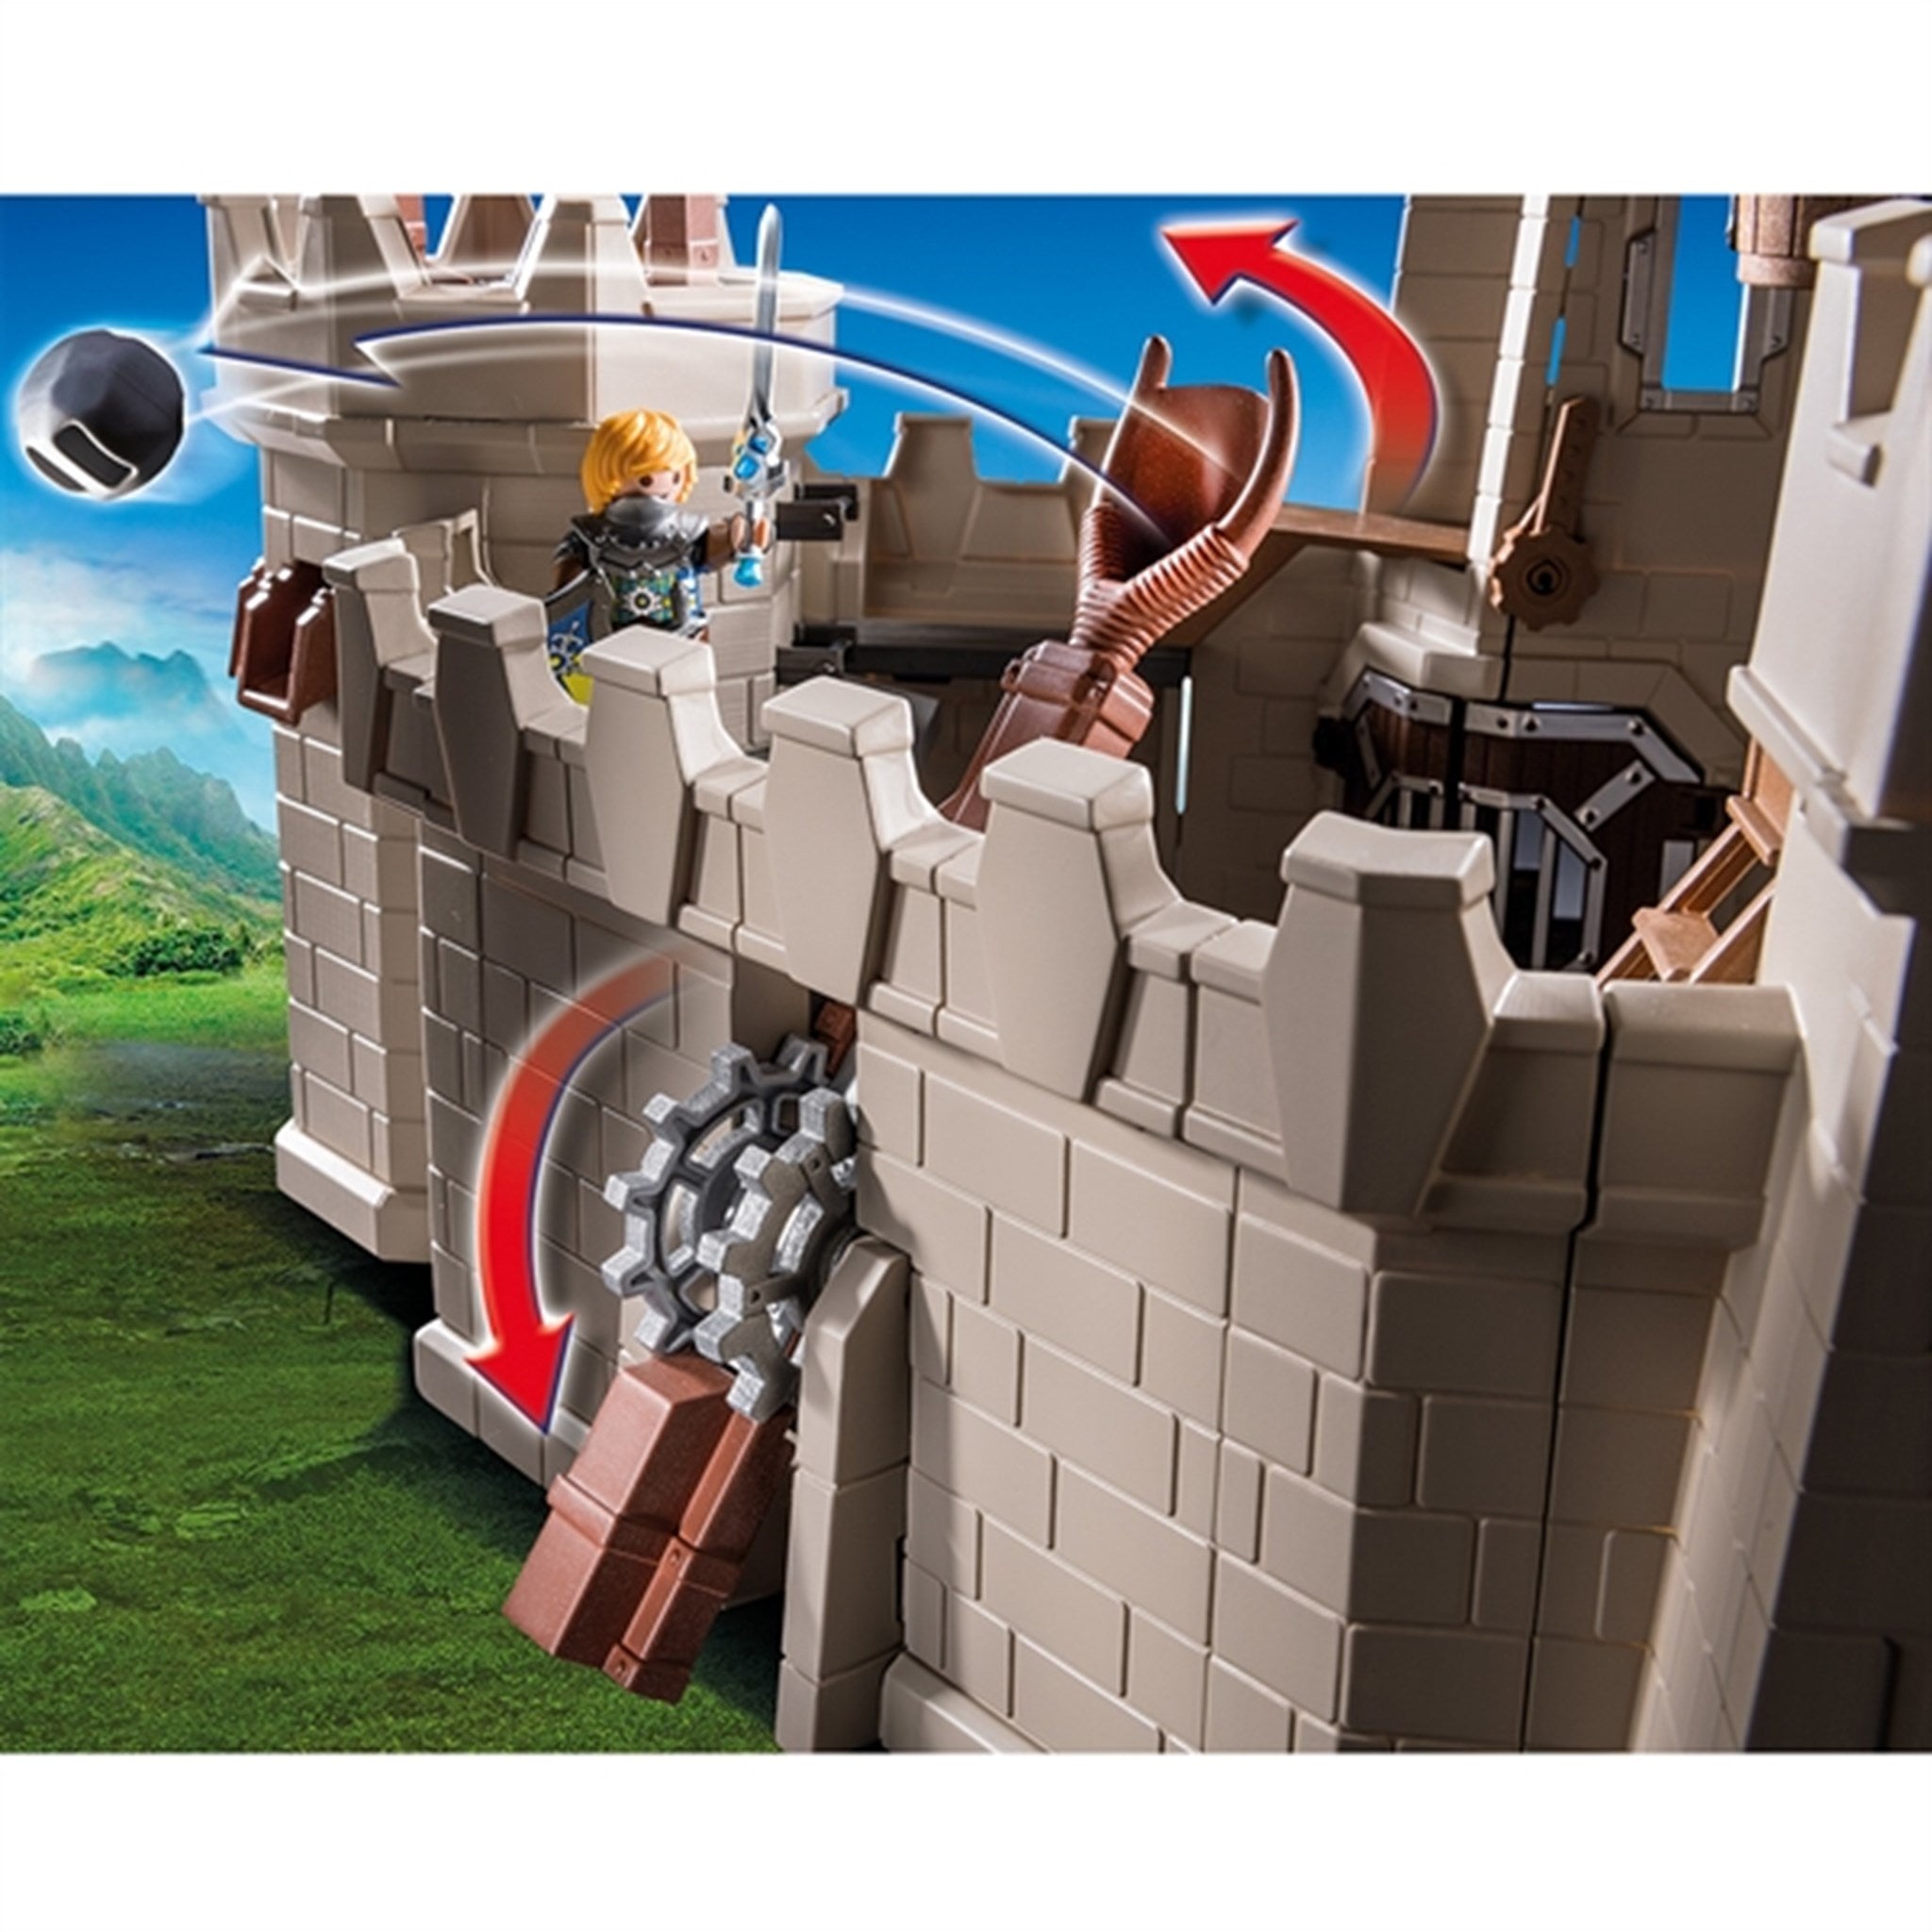 Playmobil® Novelmore - Grand Castle of Novelmore 7